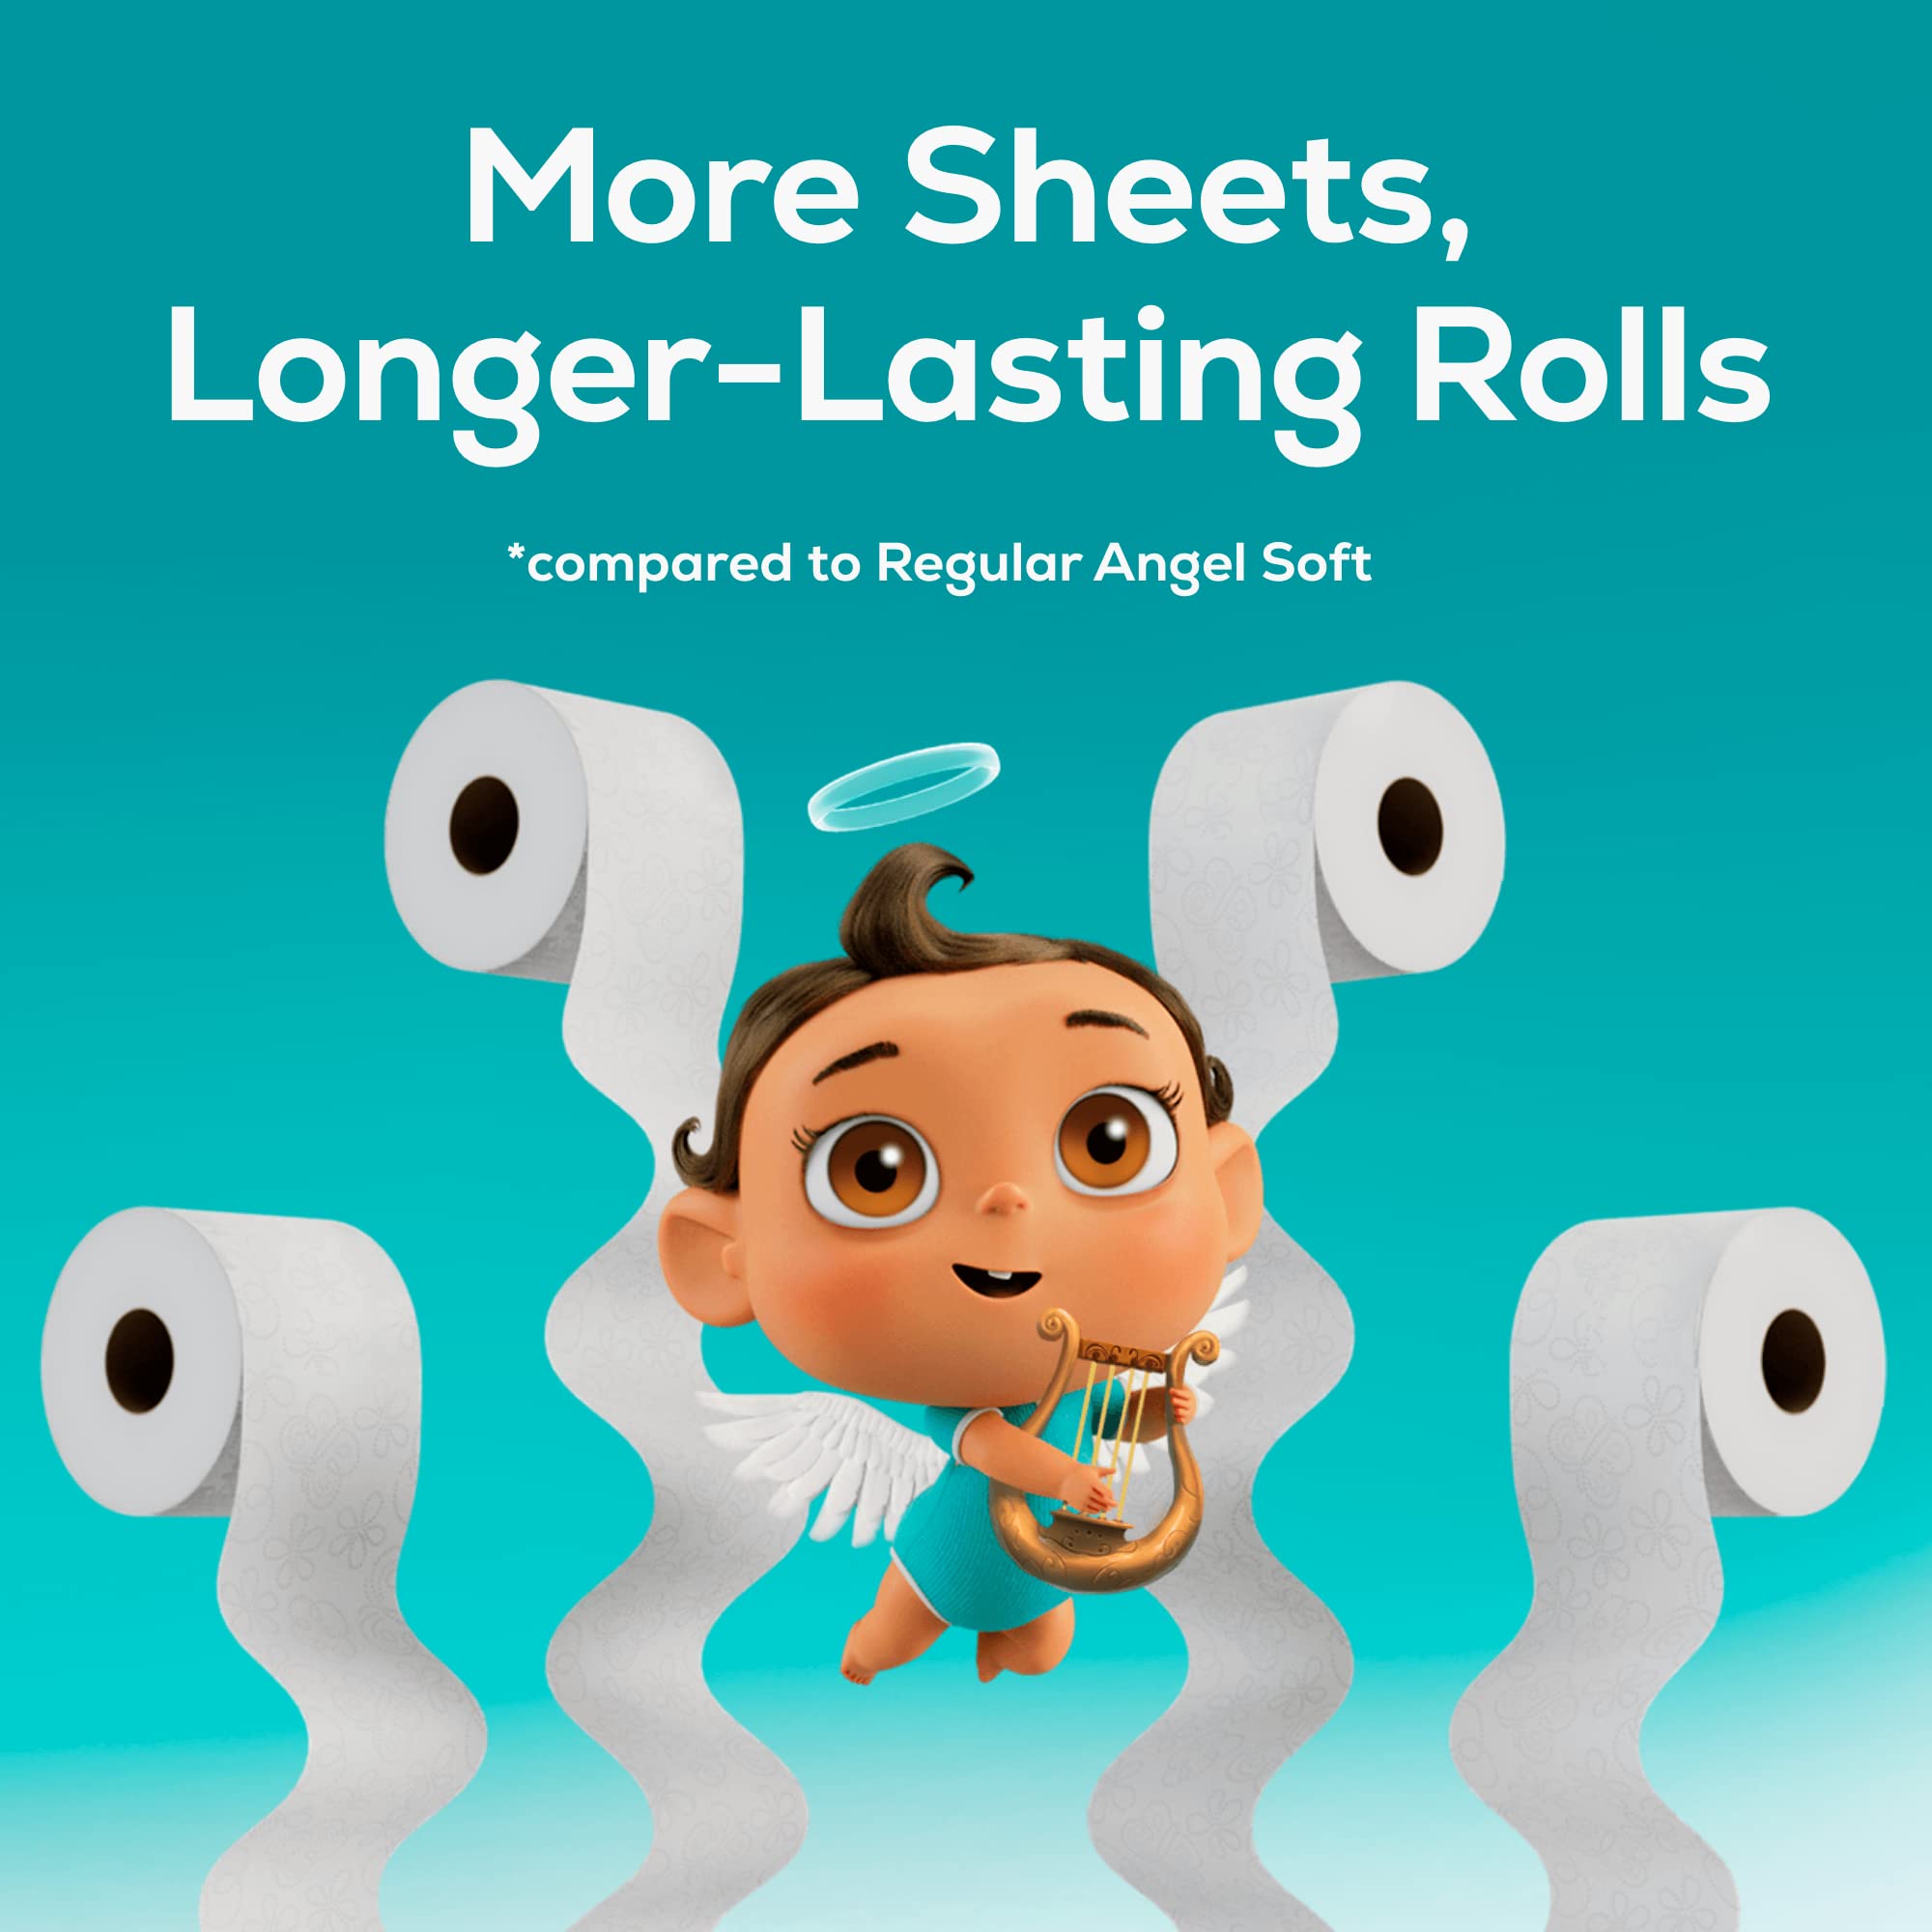 Angel Soft® Ultra Toilet Paper, 6 Mega Rolls, 2-Ply Bath Tissue